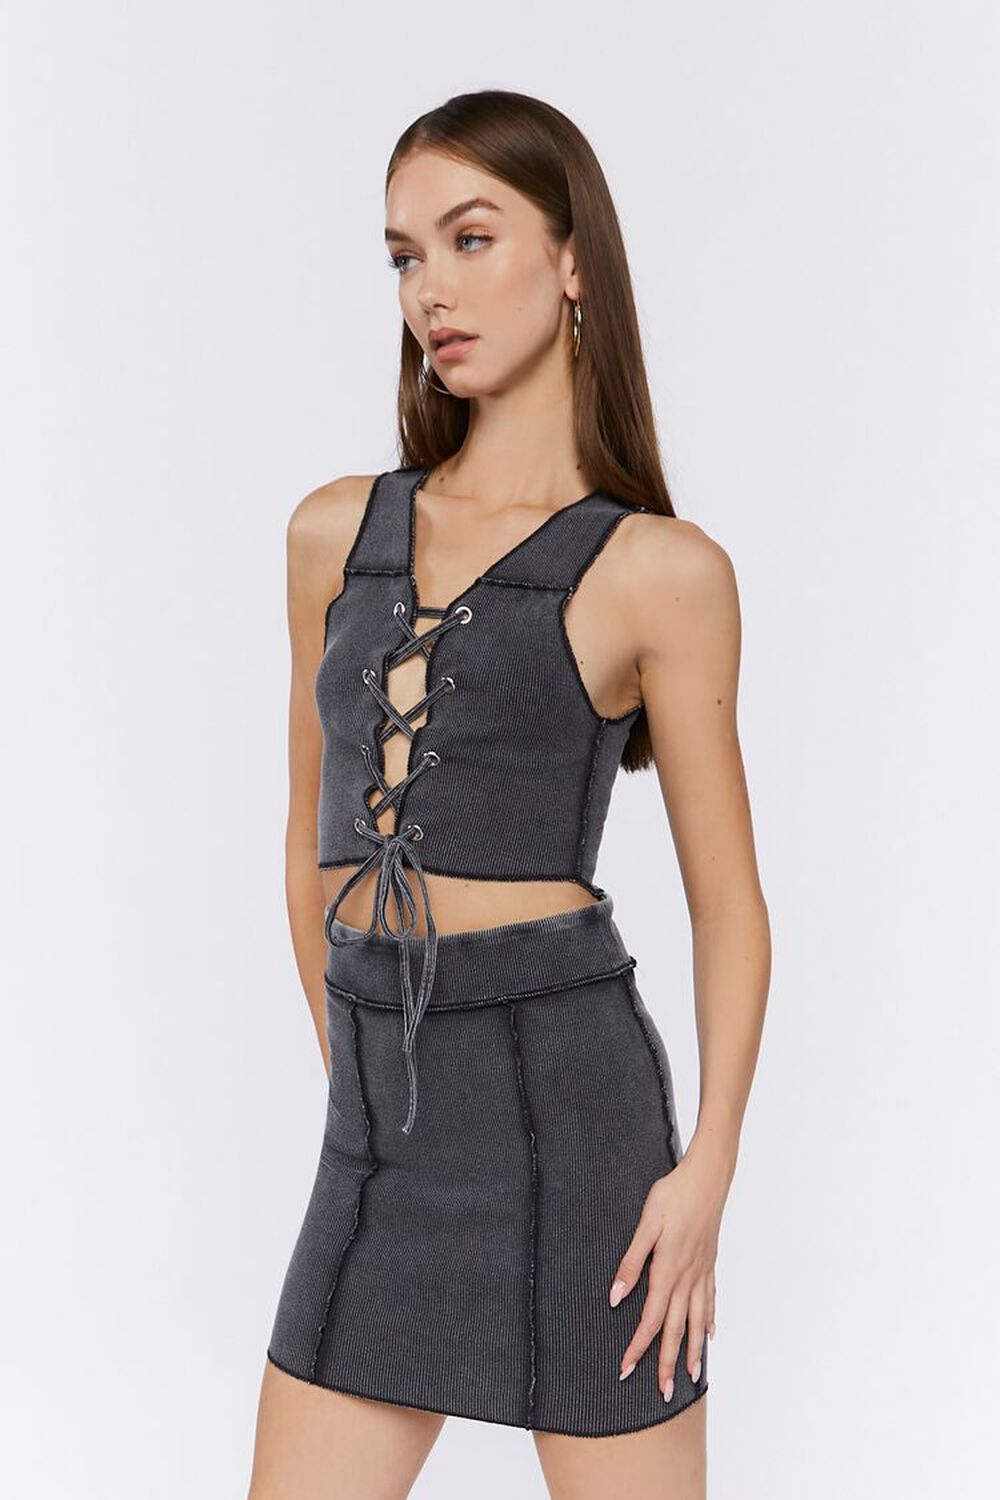 CHARCOAL Lace-Up Crop Top & Mini Skirt Set, image 2